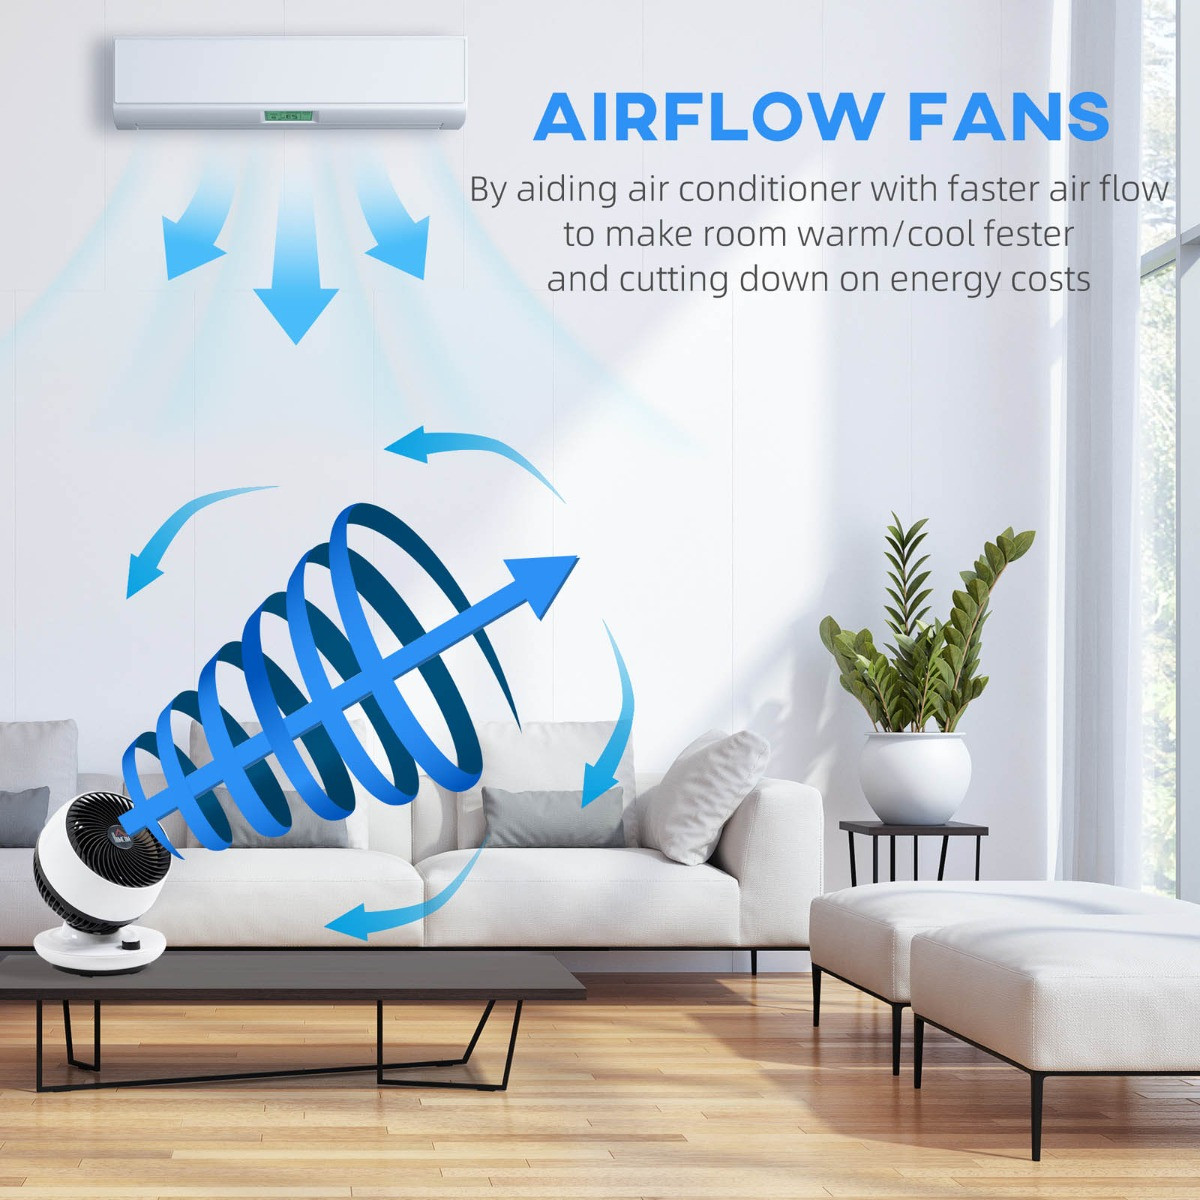 Homcom Oscillating Air Circulator Desk Fan - White>